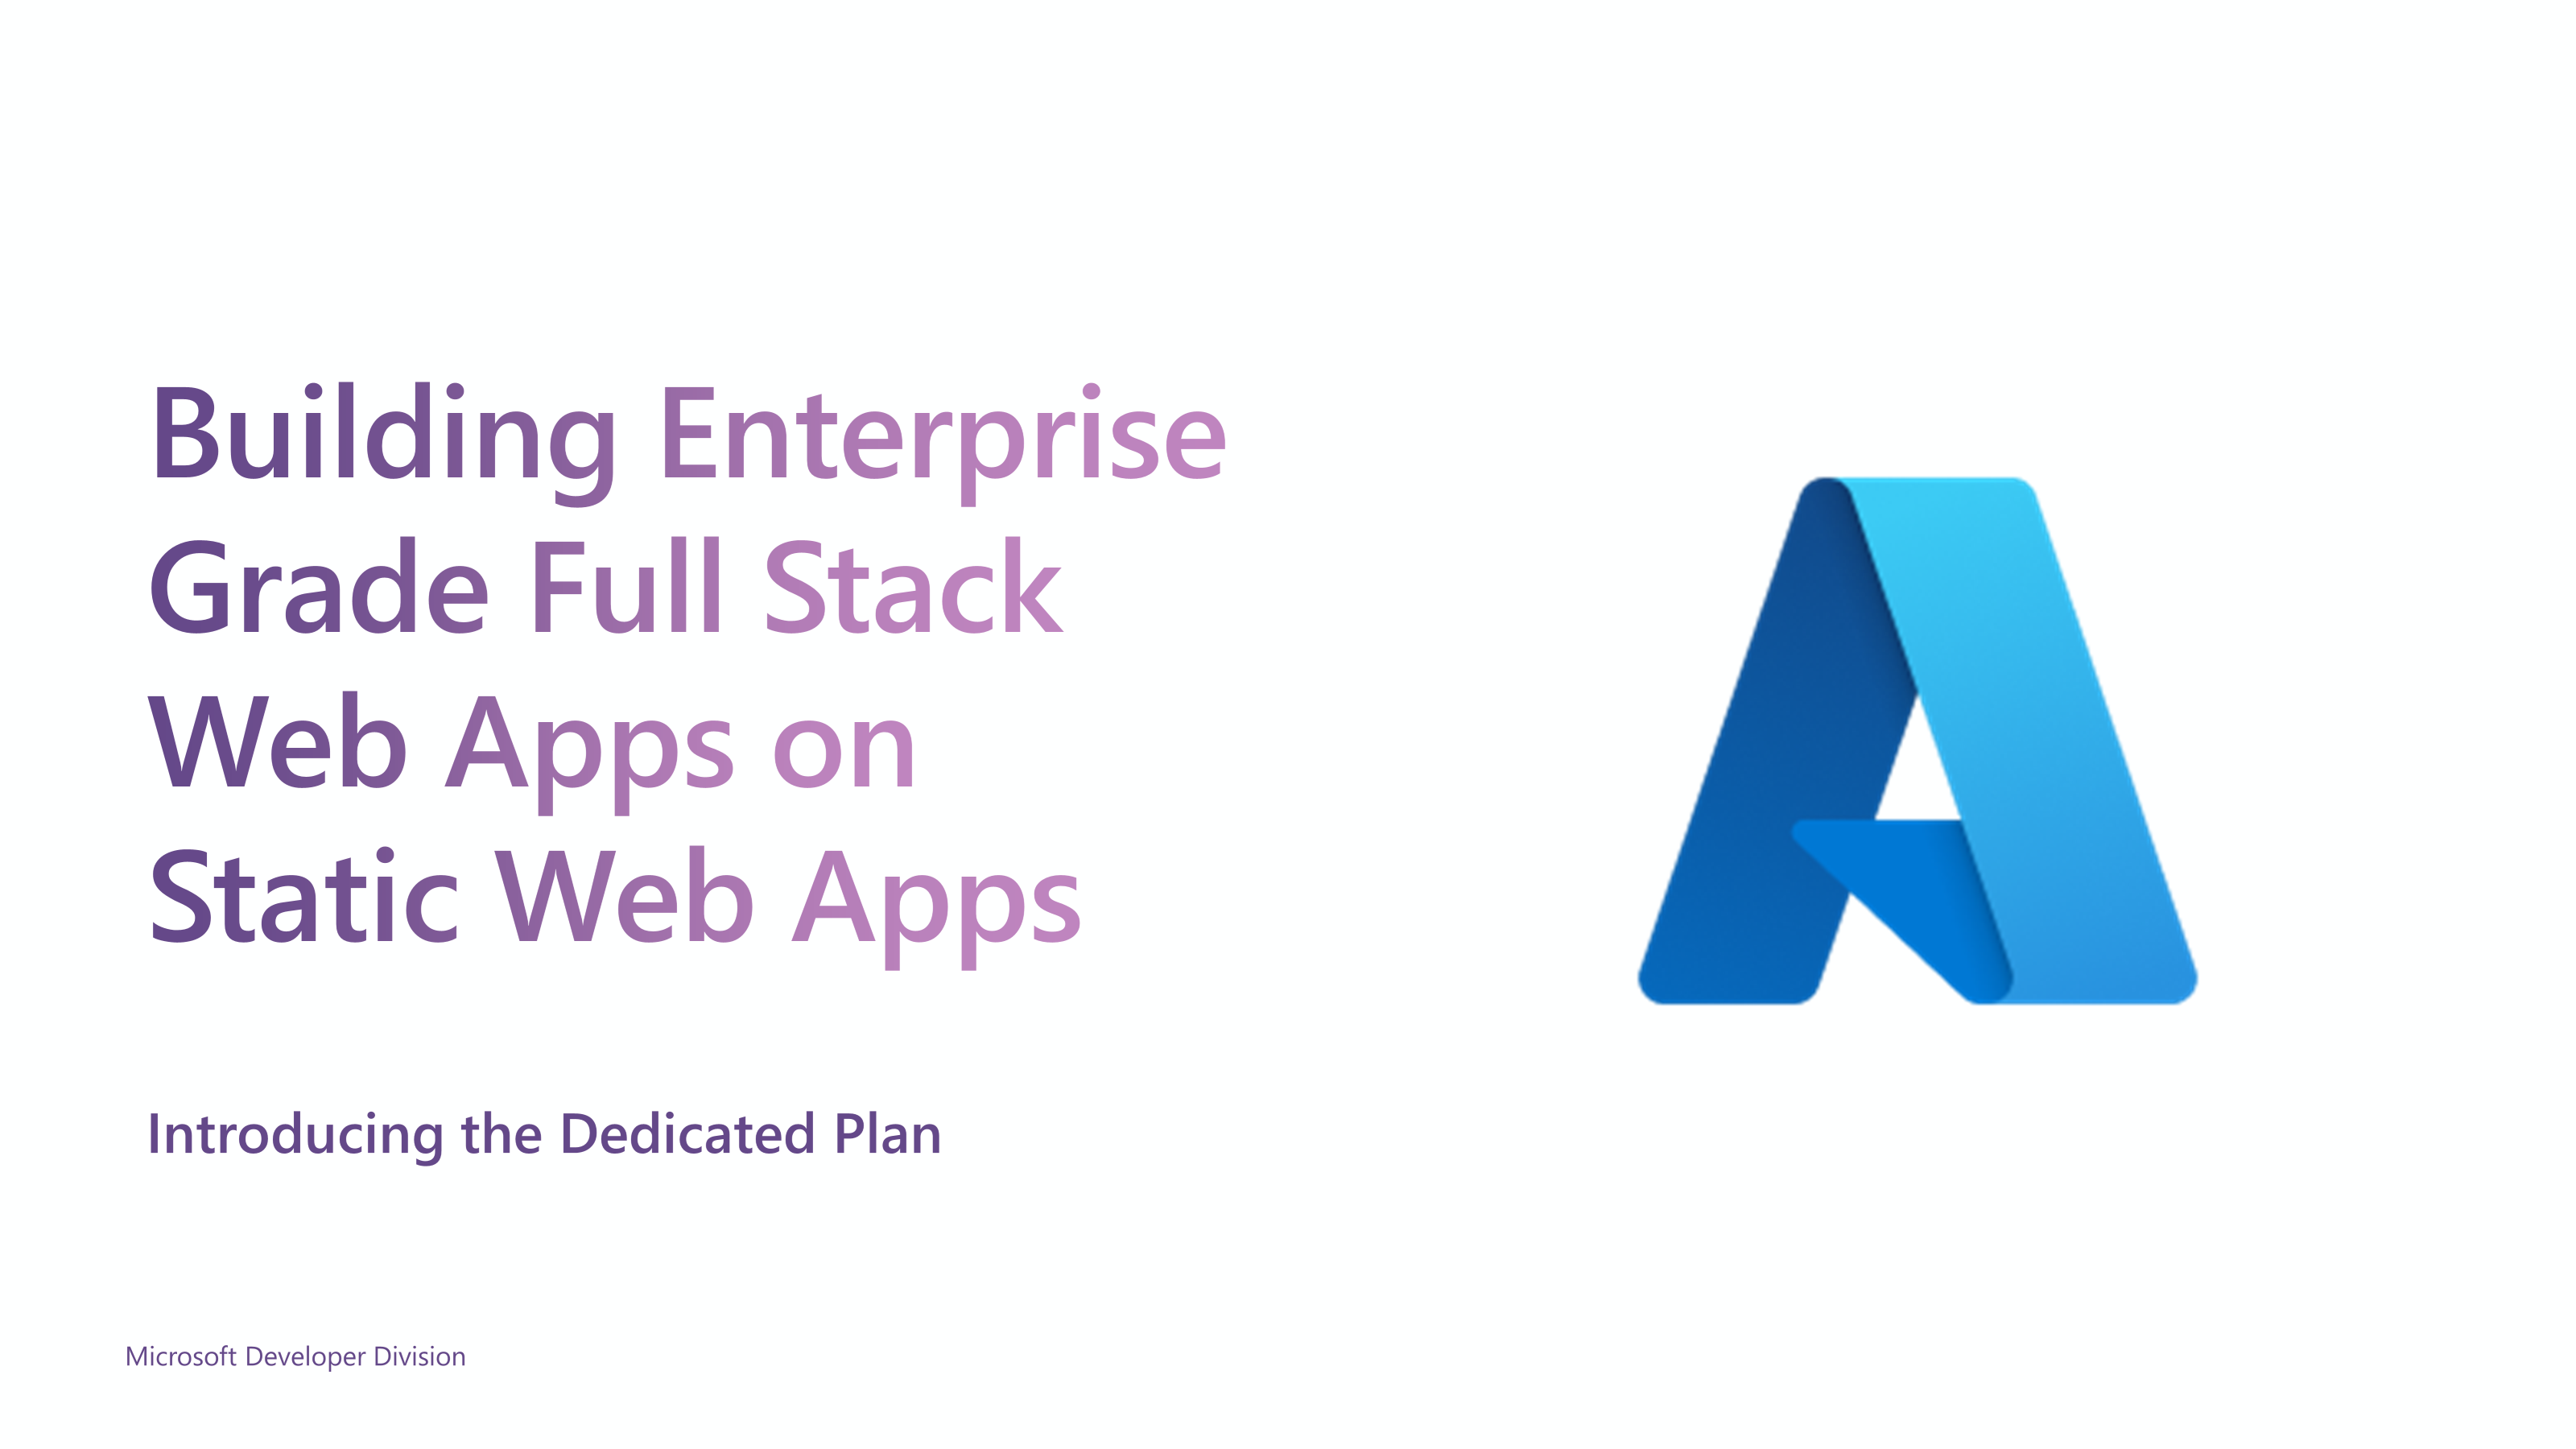 Azure Static Web Apps Dedicated Plan: Building Enterprise Grade Full Stack Web Apps